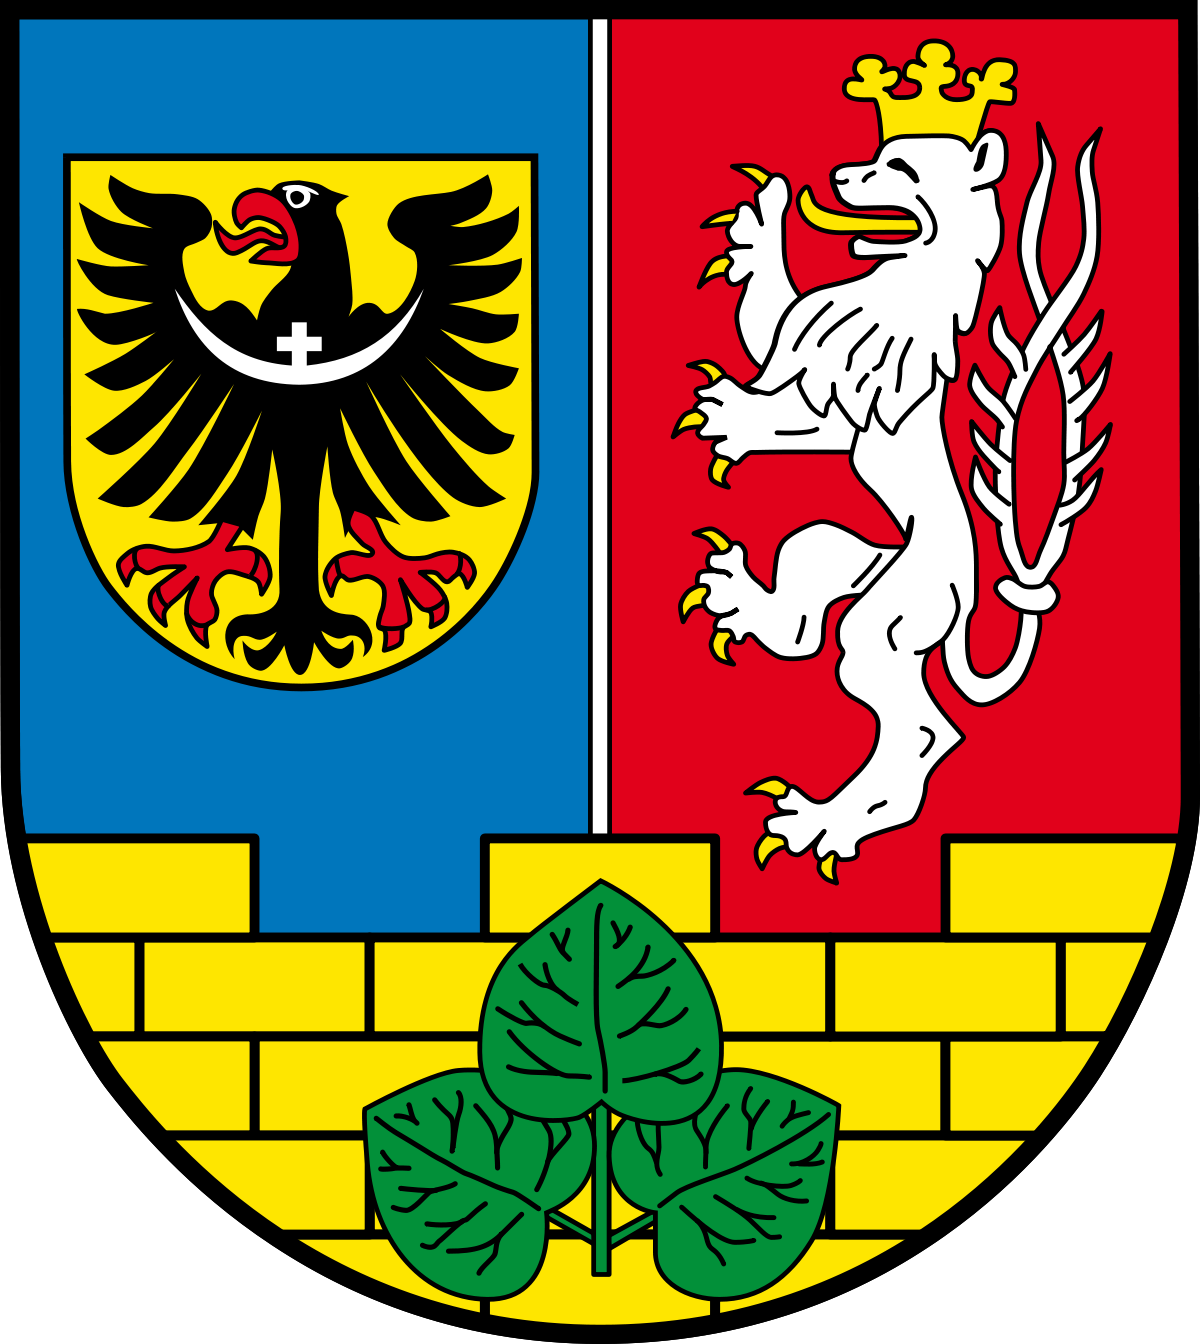 Wappen Landkreis Görlitz